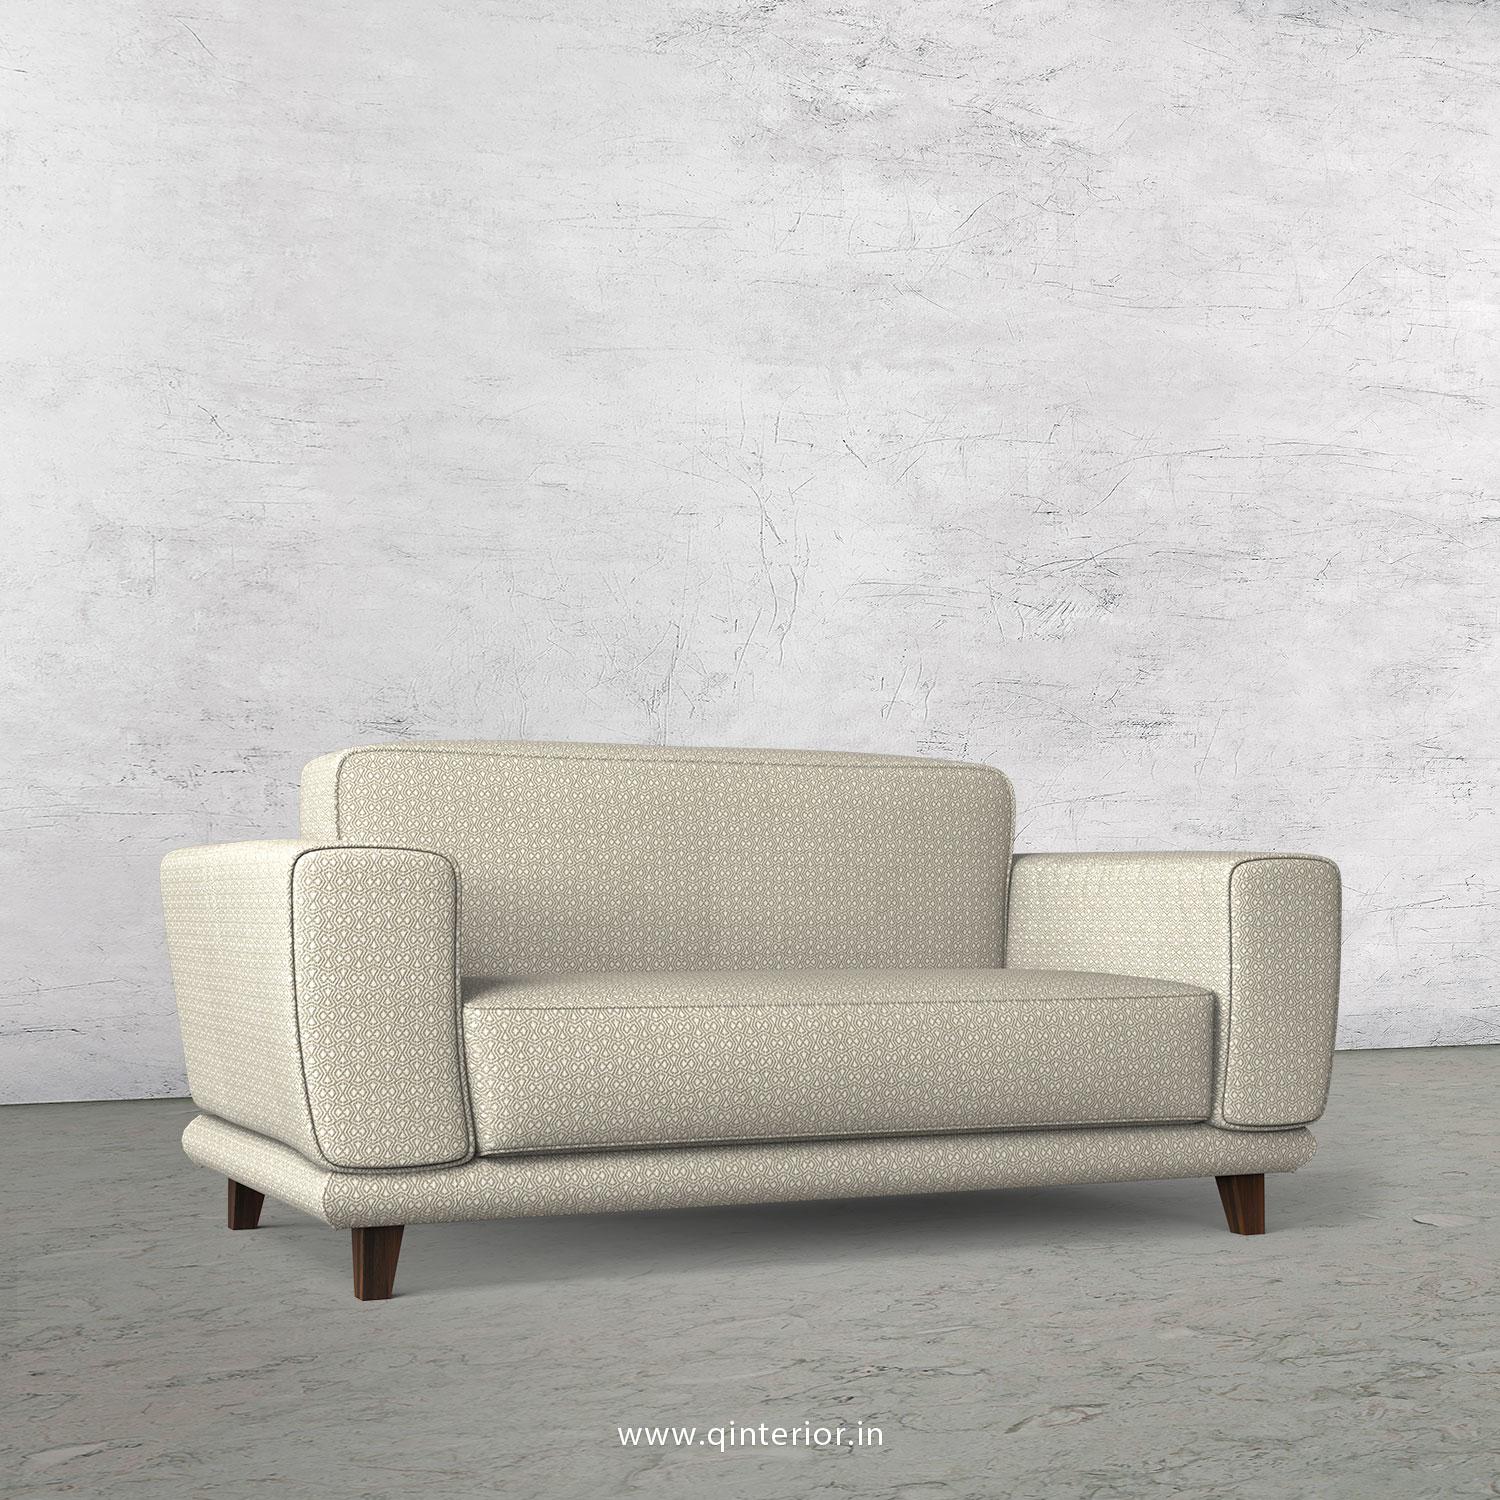 Avana 2 Seater Sofa in Jaquard Fabric - SFA008 JQ37